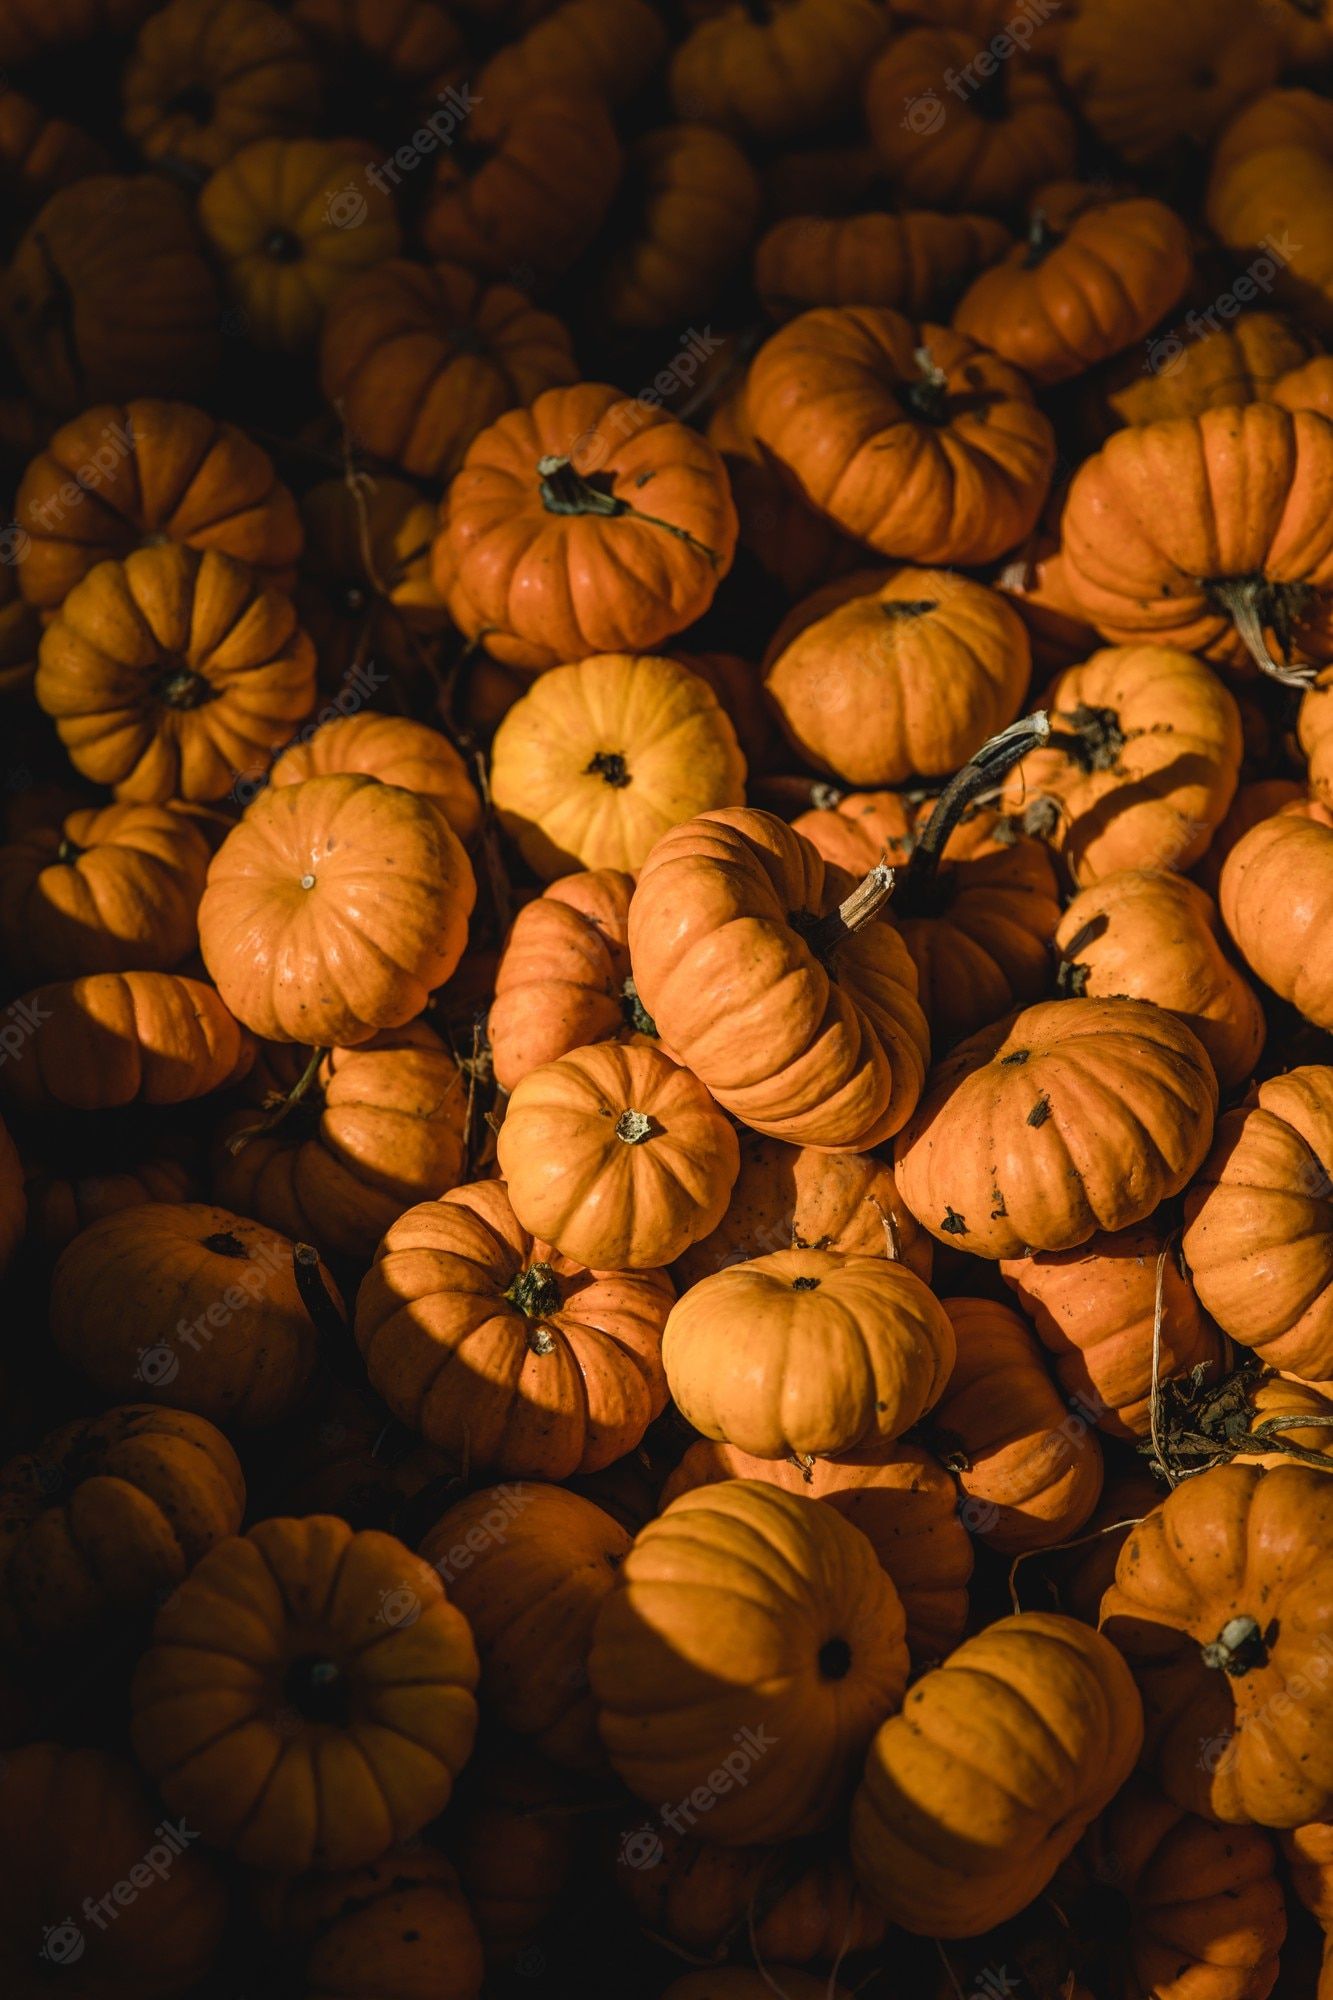 Fall Pumpkin Wallpaper Image